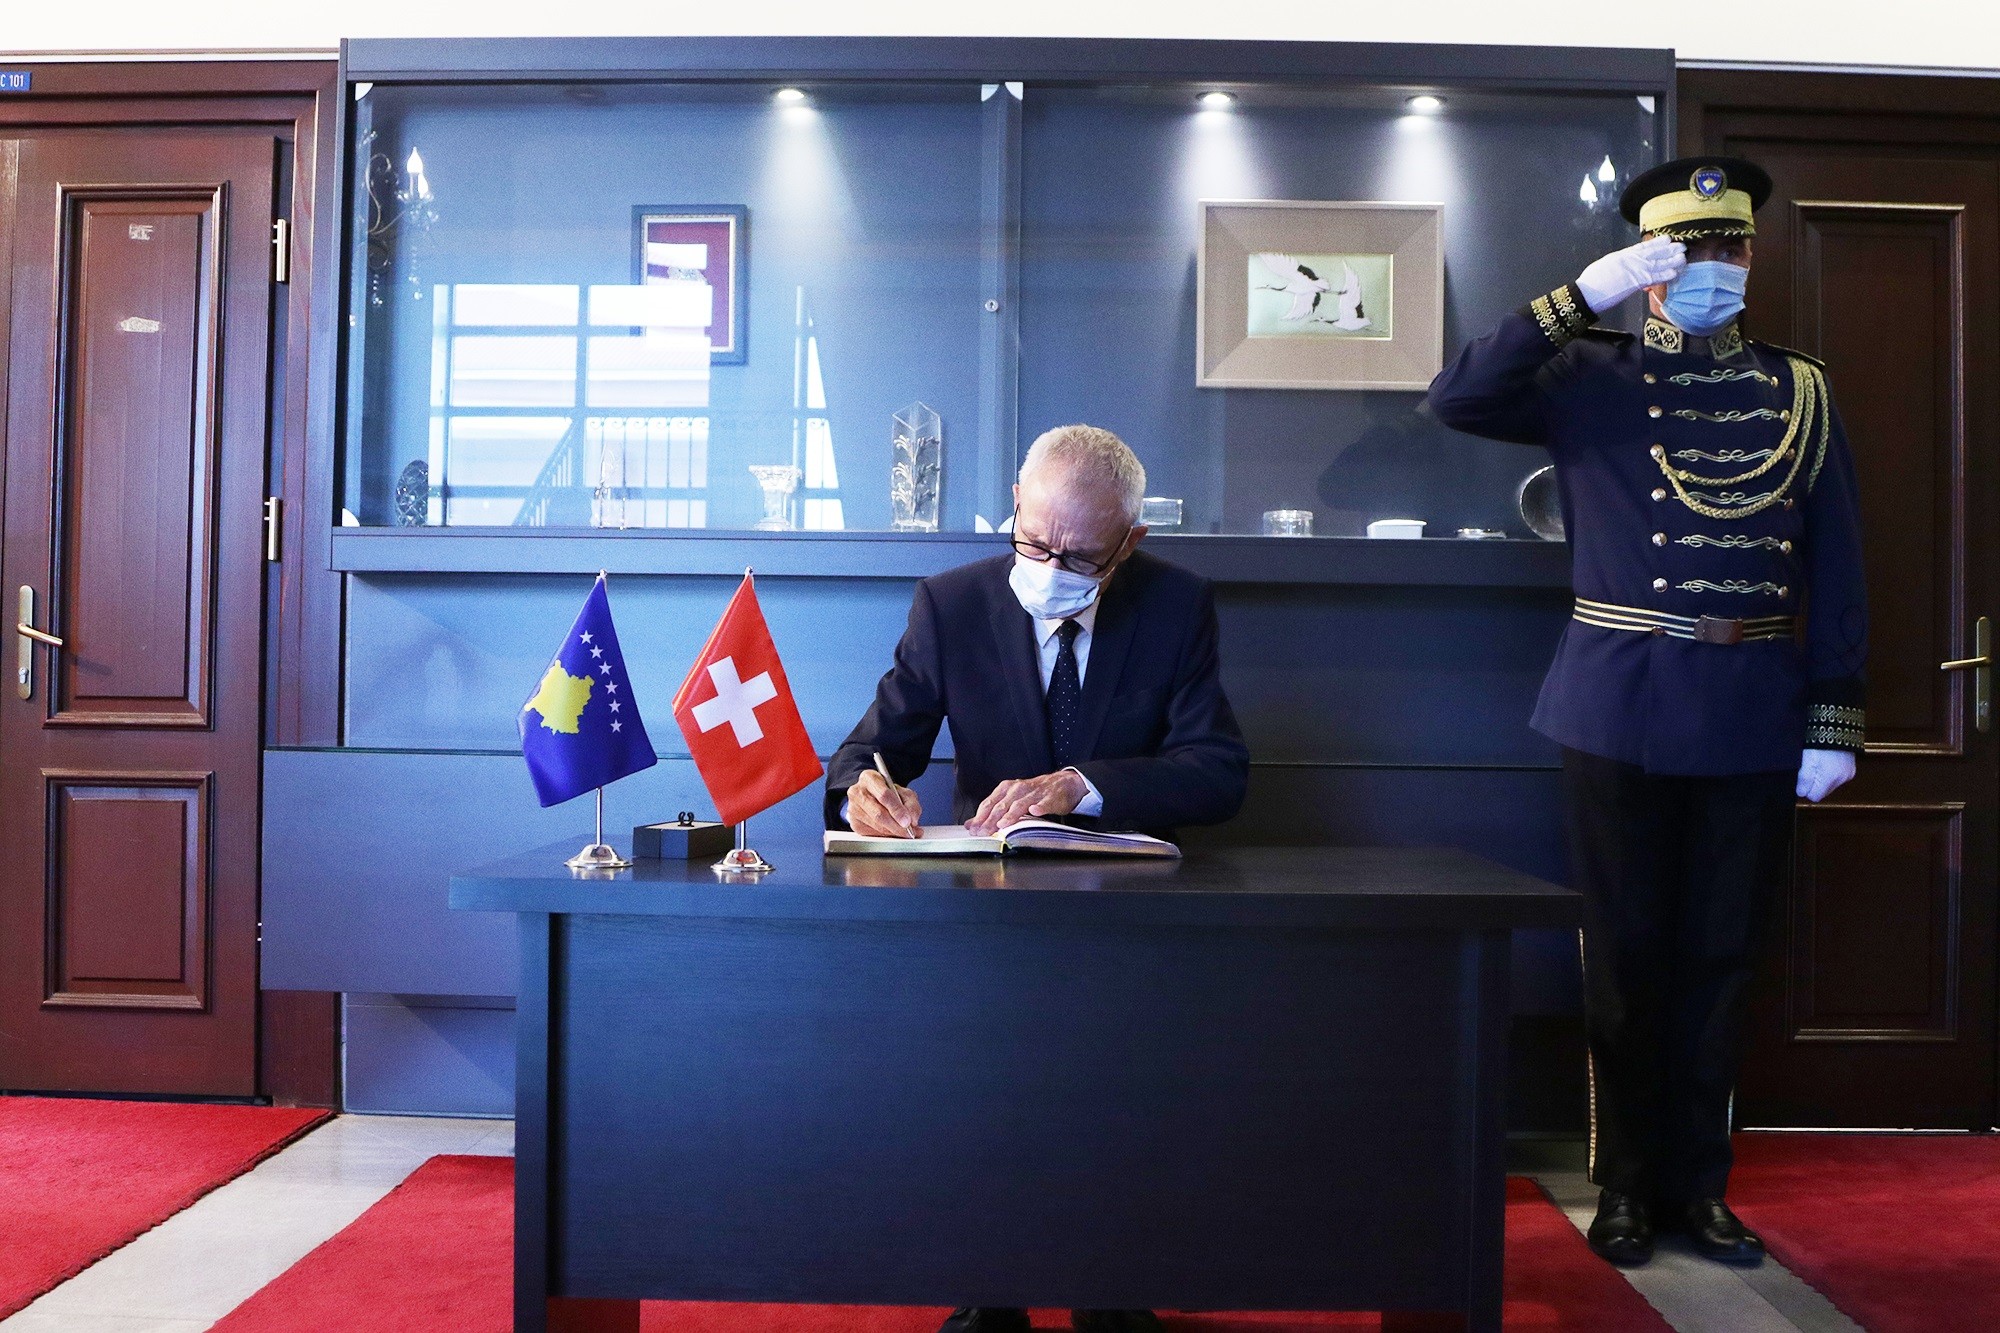 Presidenti Thaçi pranoi letrat kredenciale nga ambasadori i ri i Zvicrës